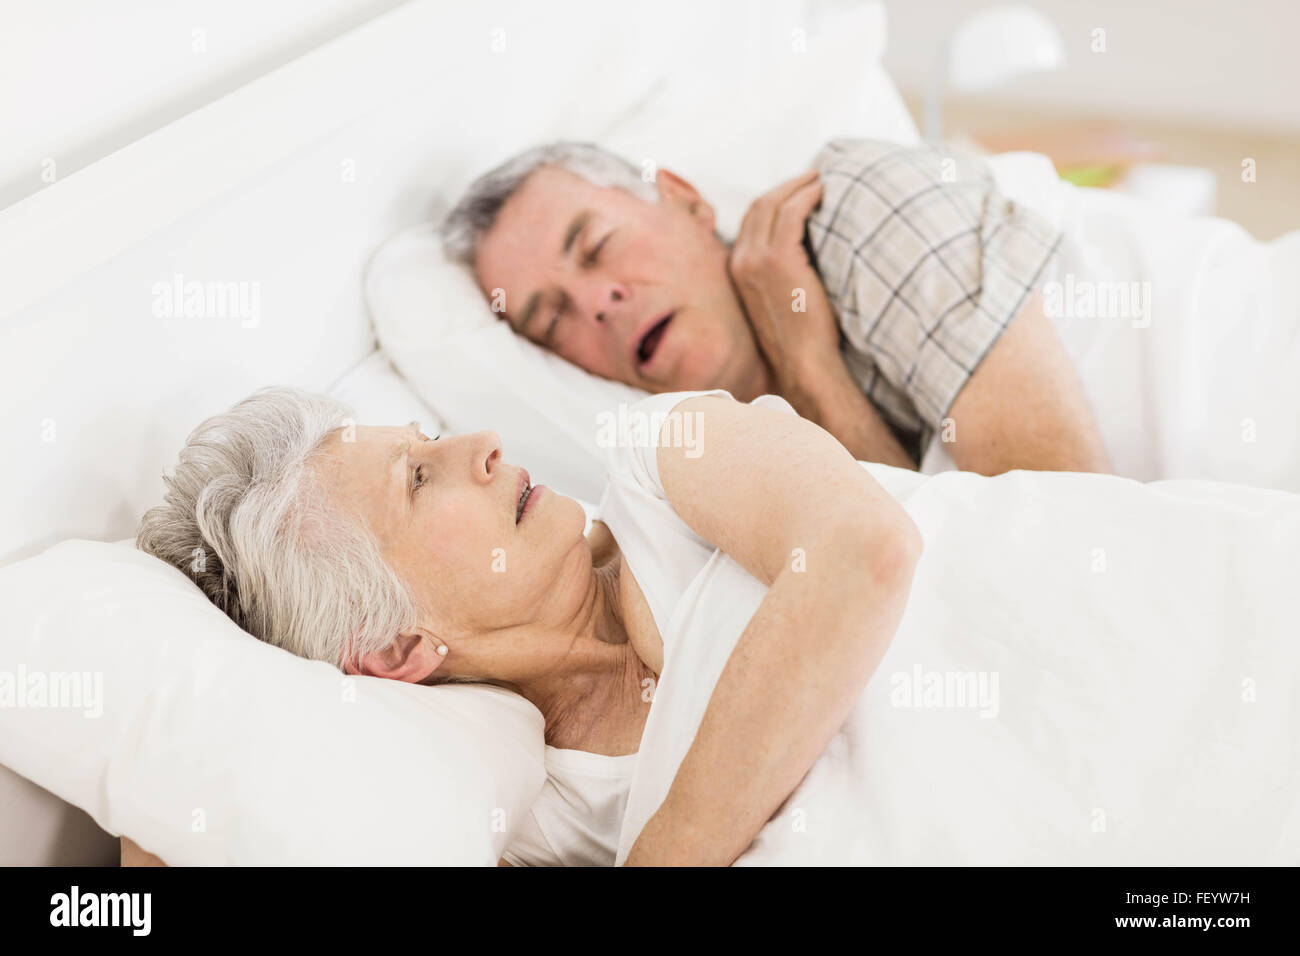 Awake senior woman in bed Stock Photo